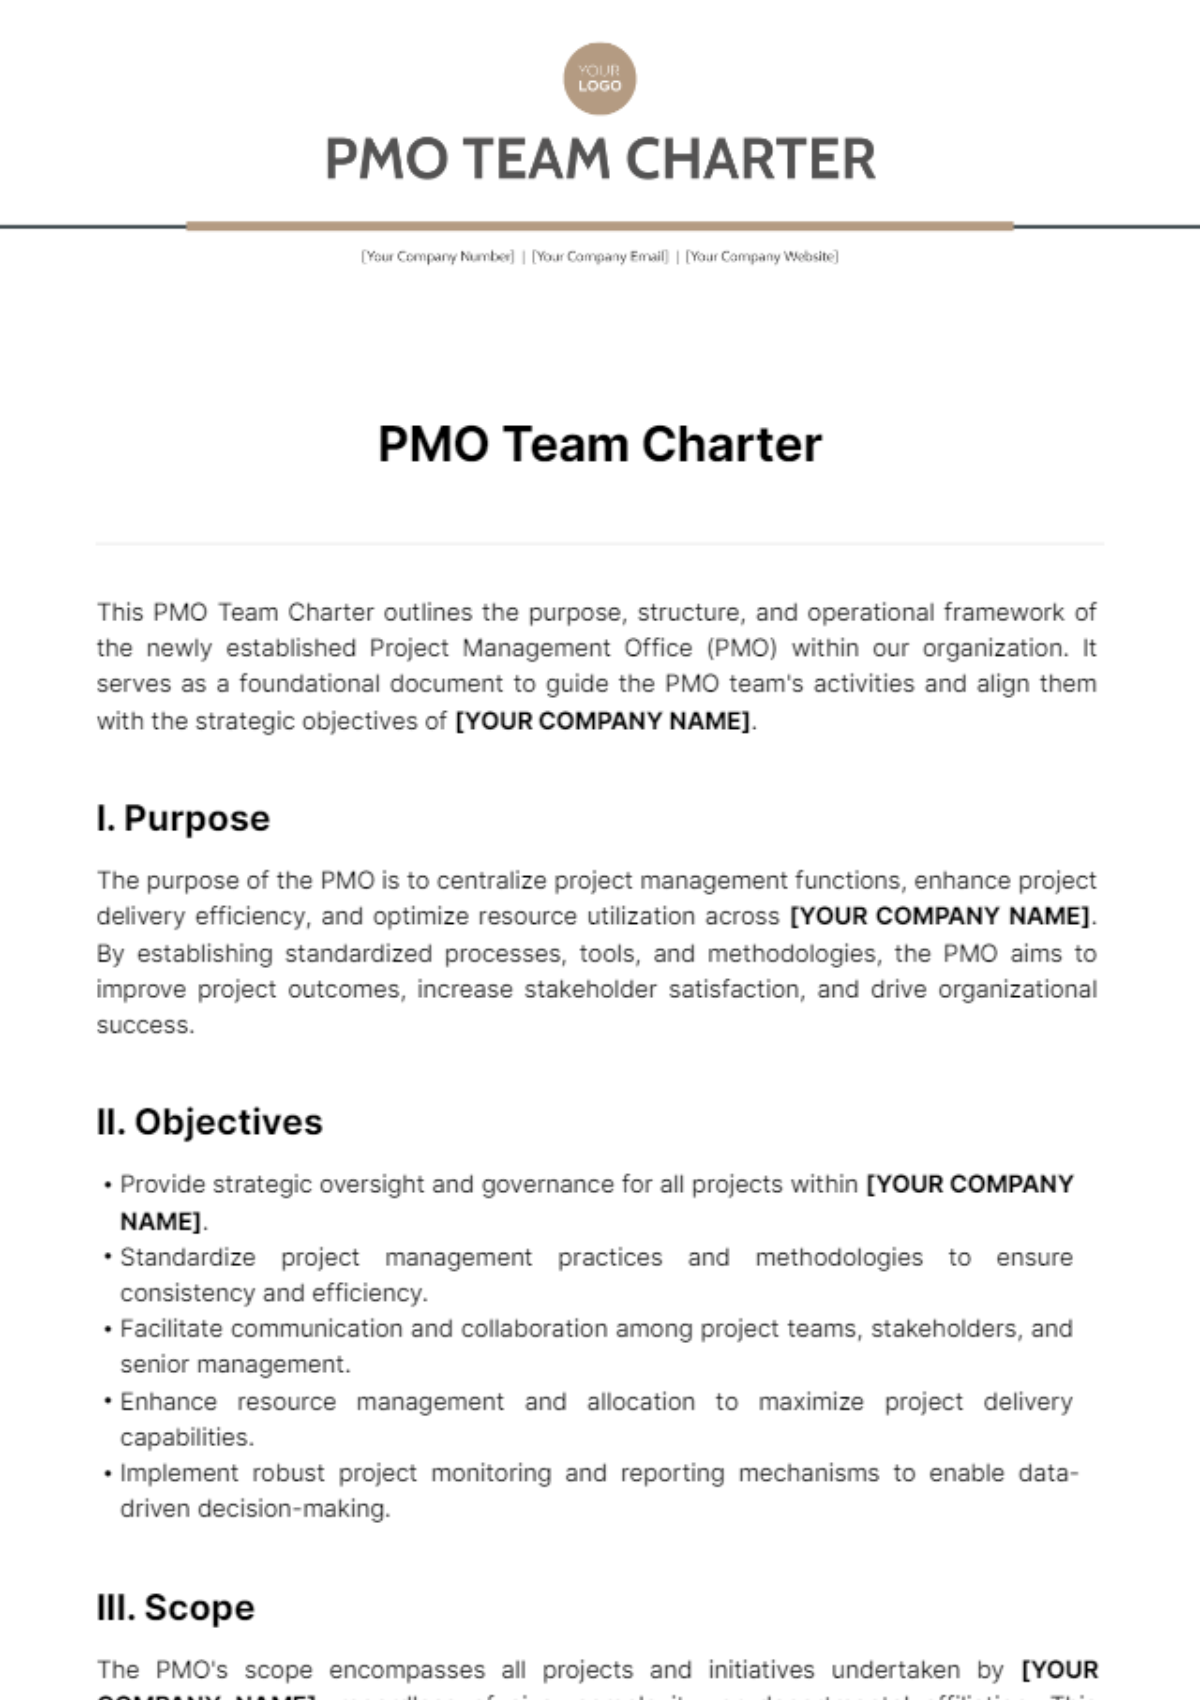 Free PMO Team Charter Template